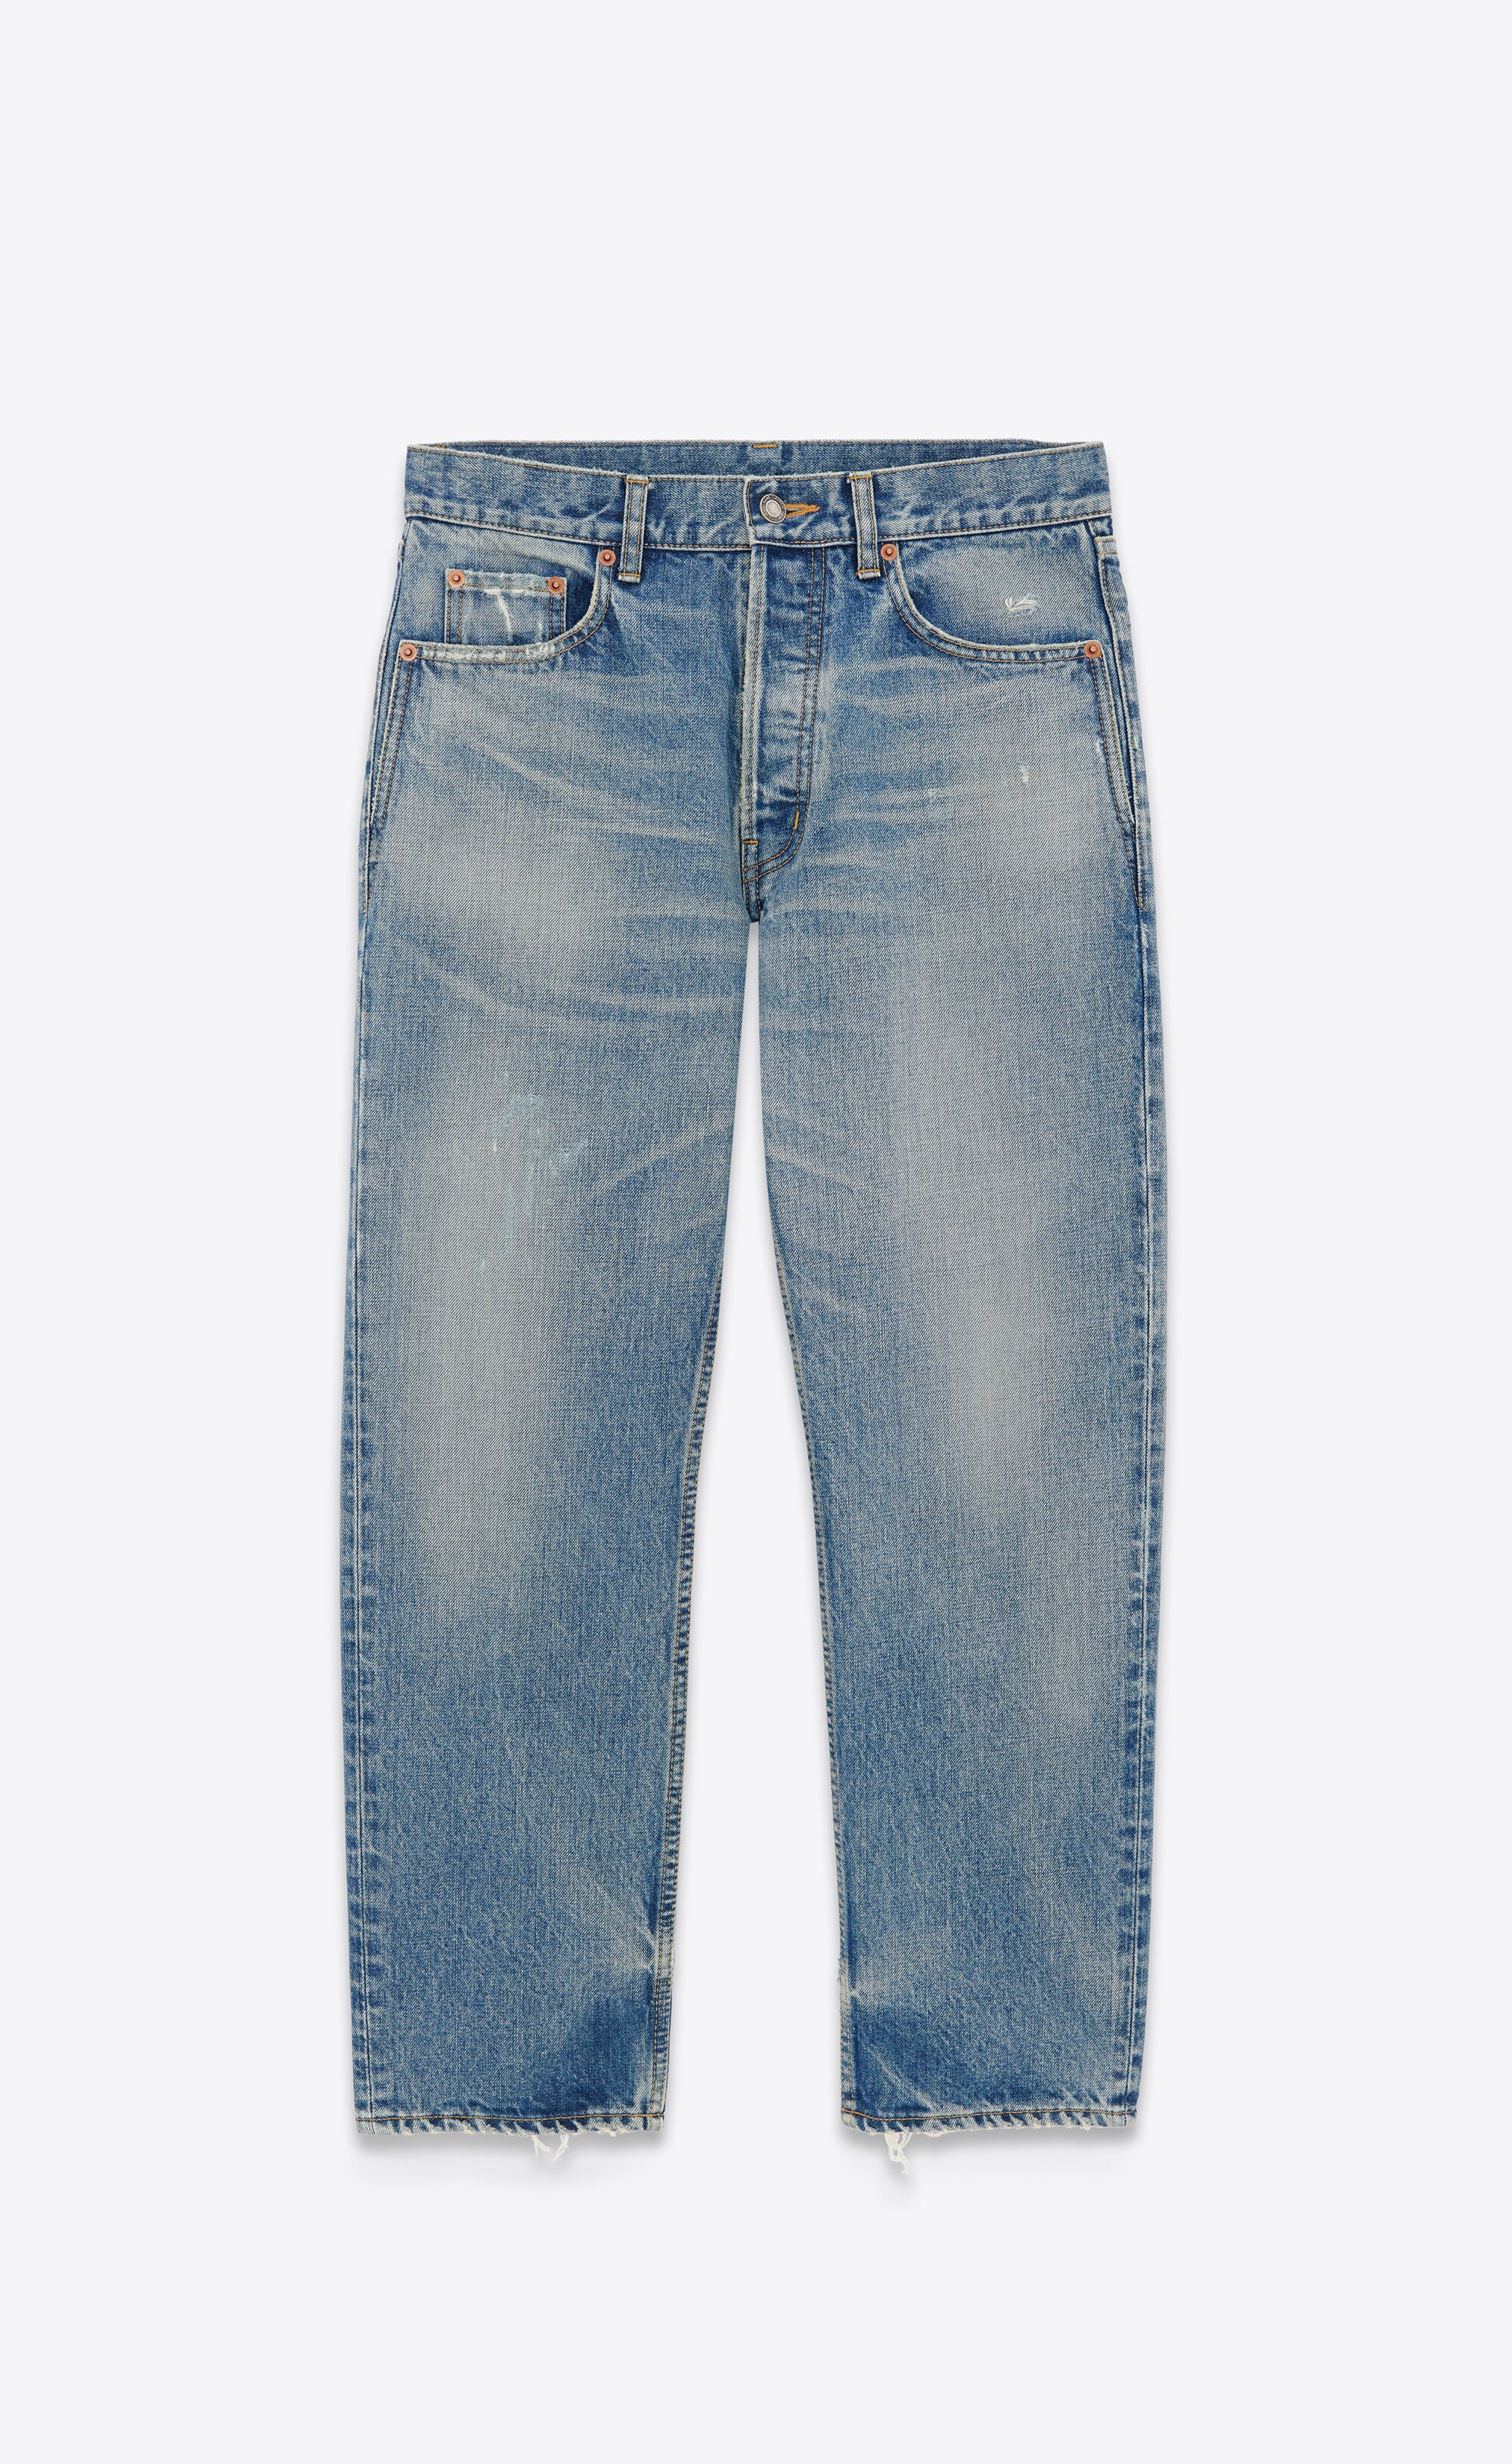 mick jeans in charlotte blue denim - 1